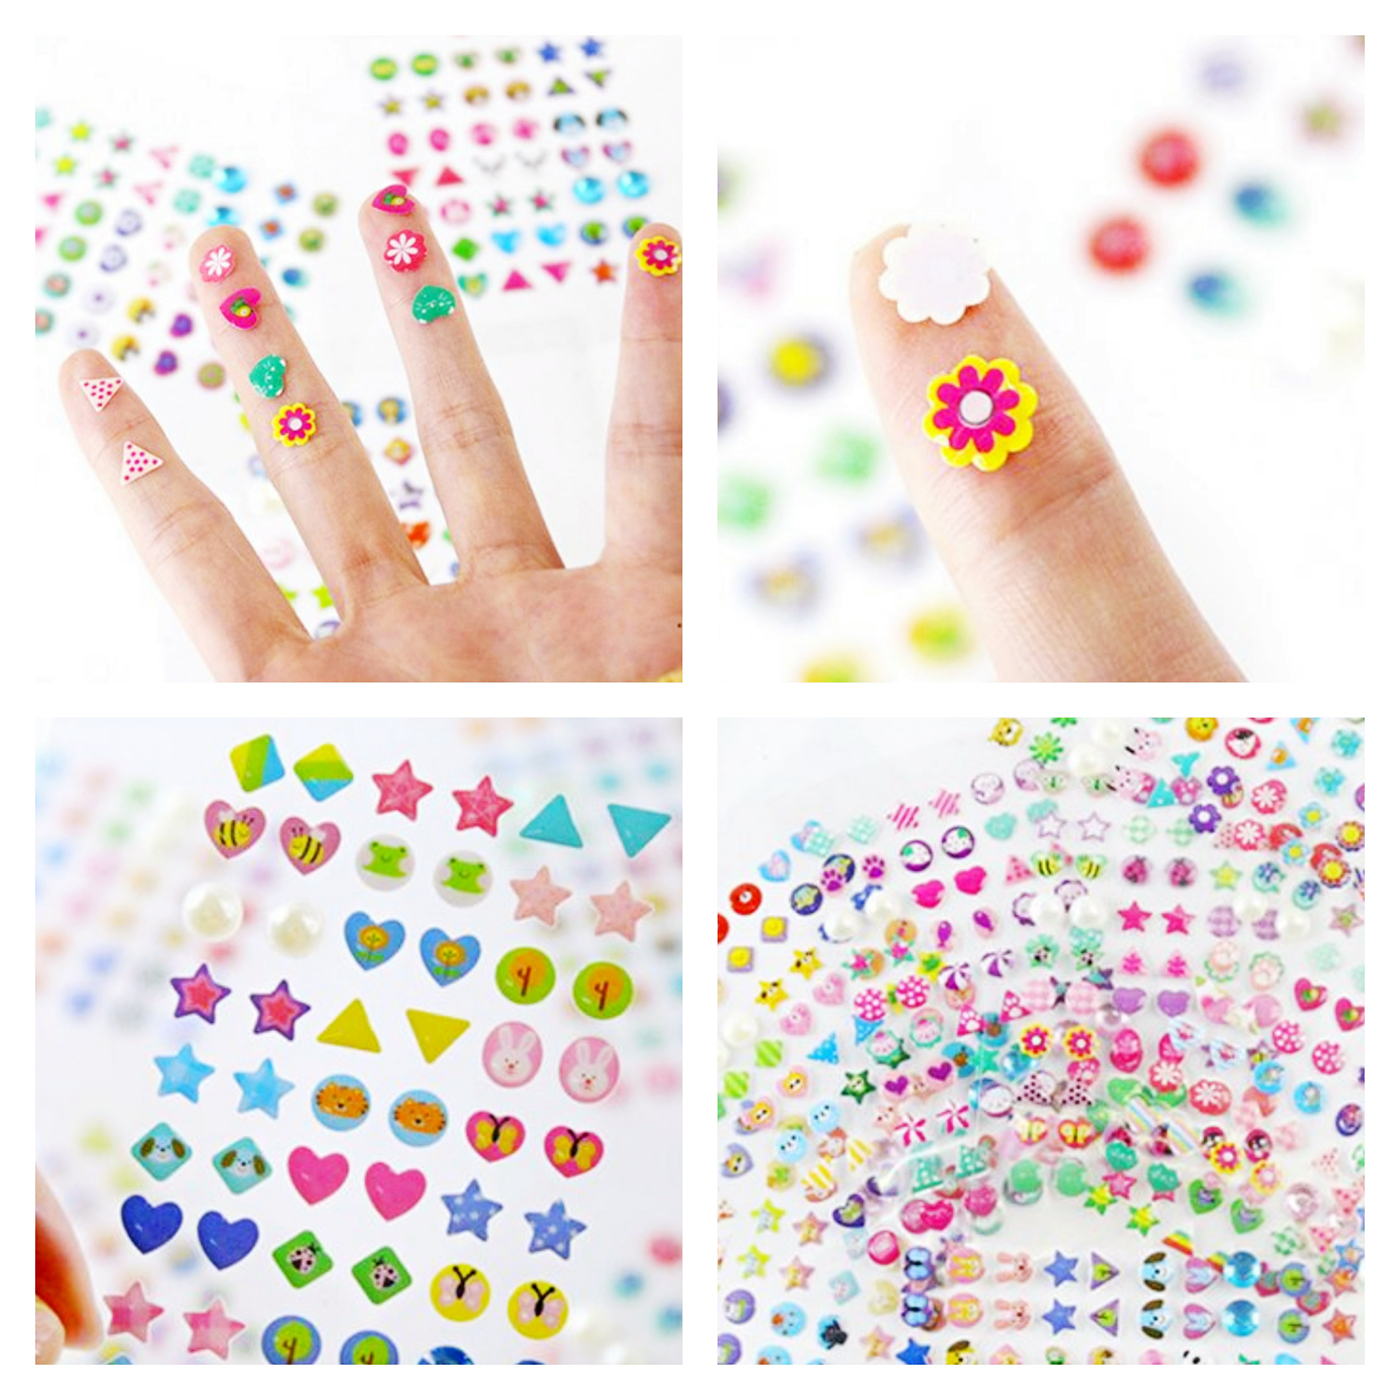 Stick on Earrings for Little Girls Gems Diamond Sticker Earrings Self- Adhesive Glitter Craft Crystal Stickers 300Pcs 